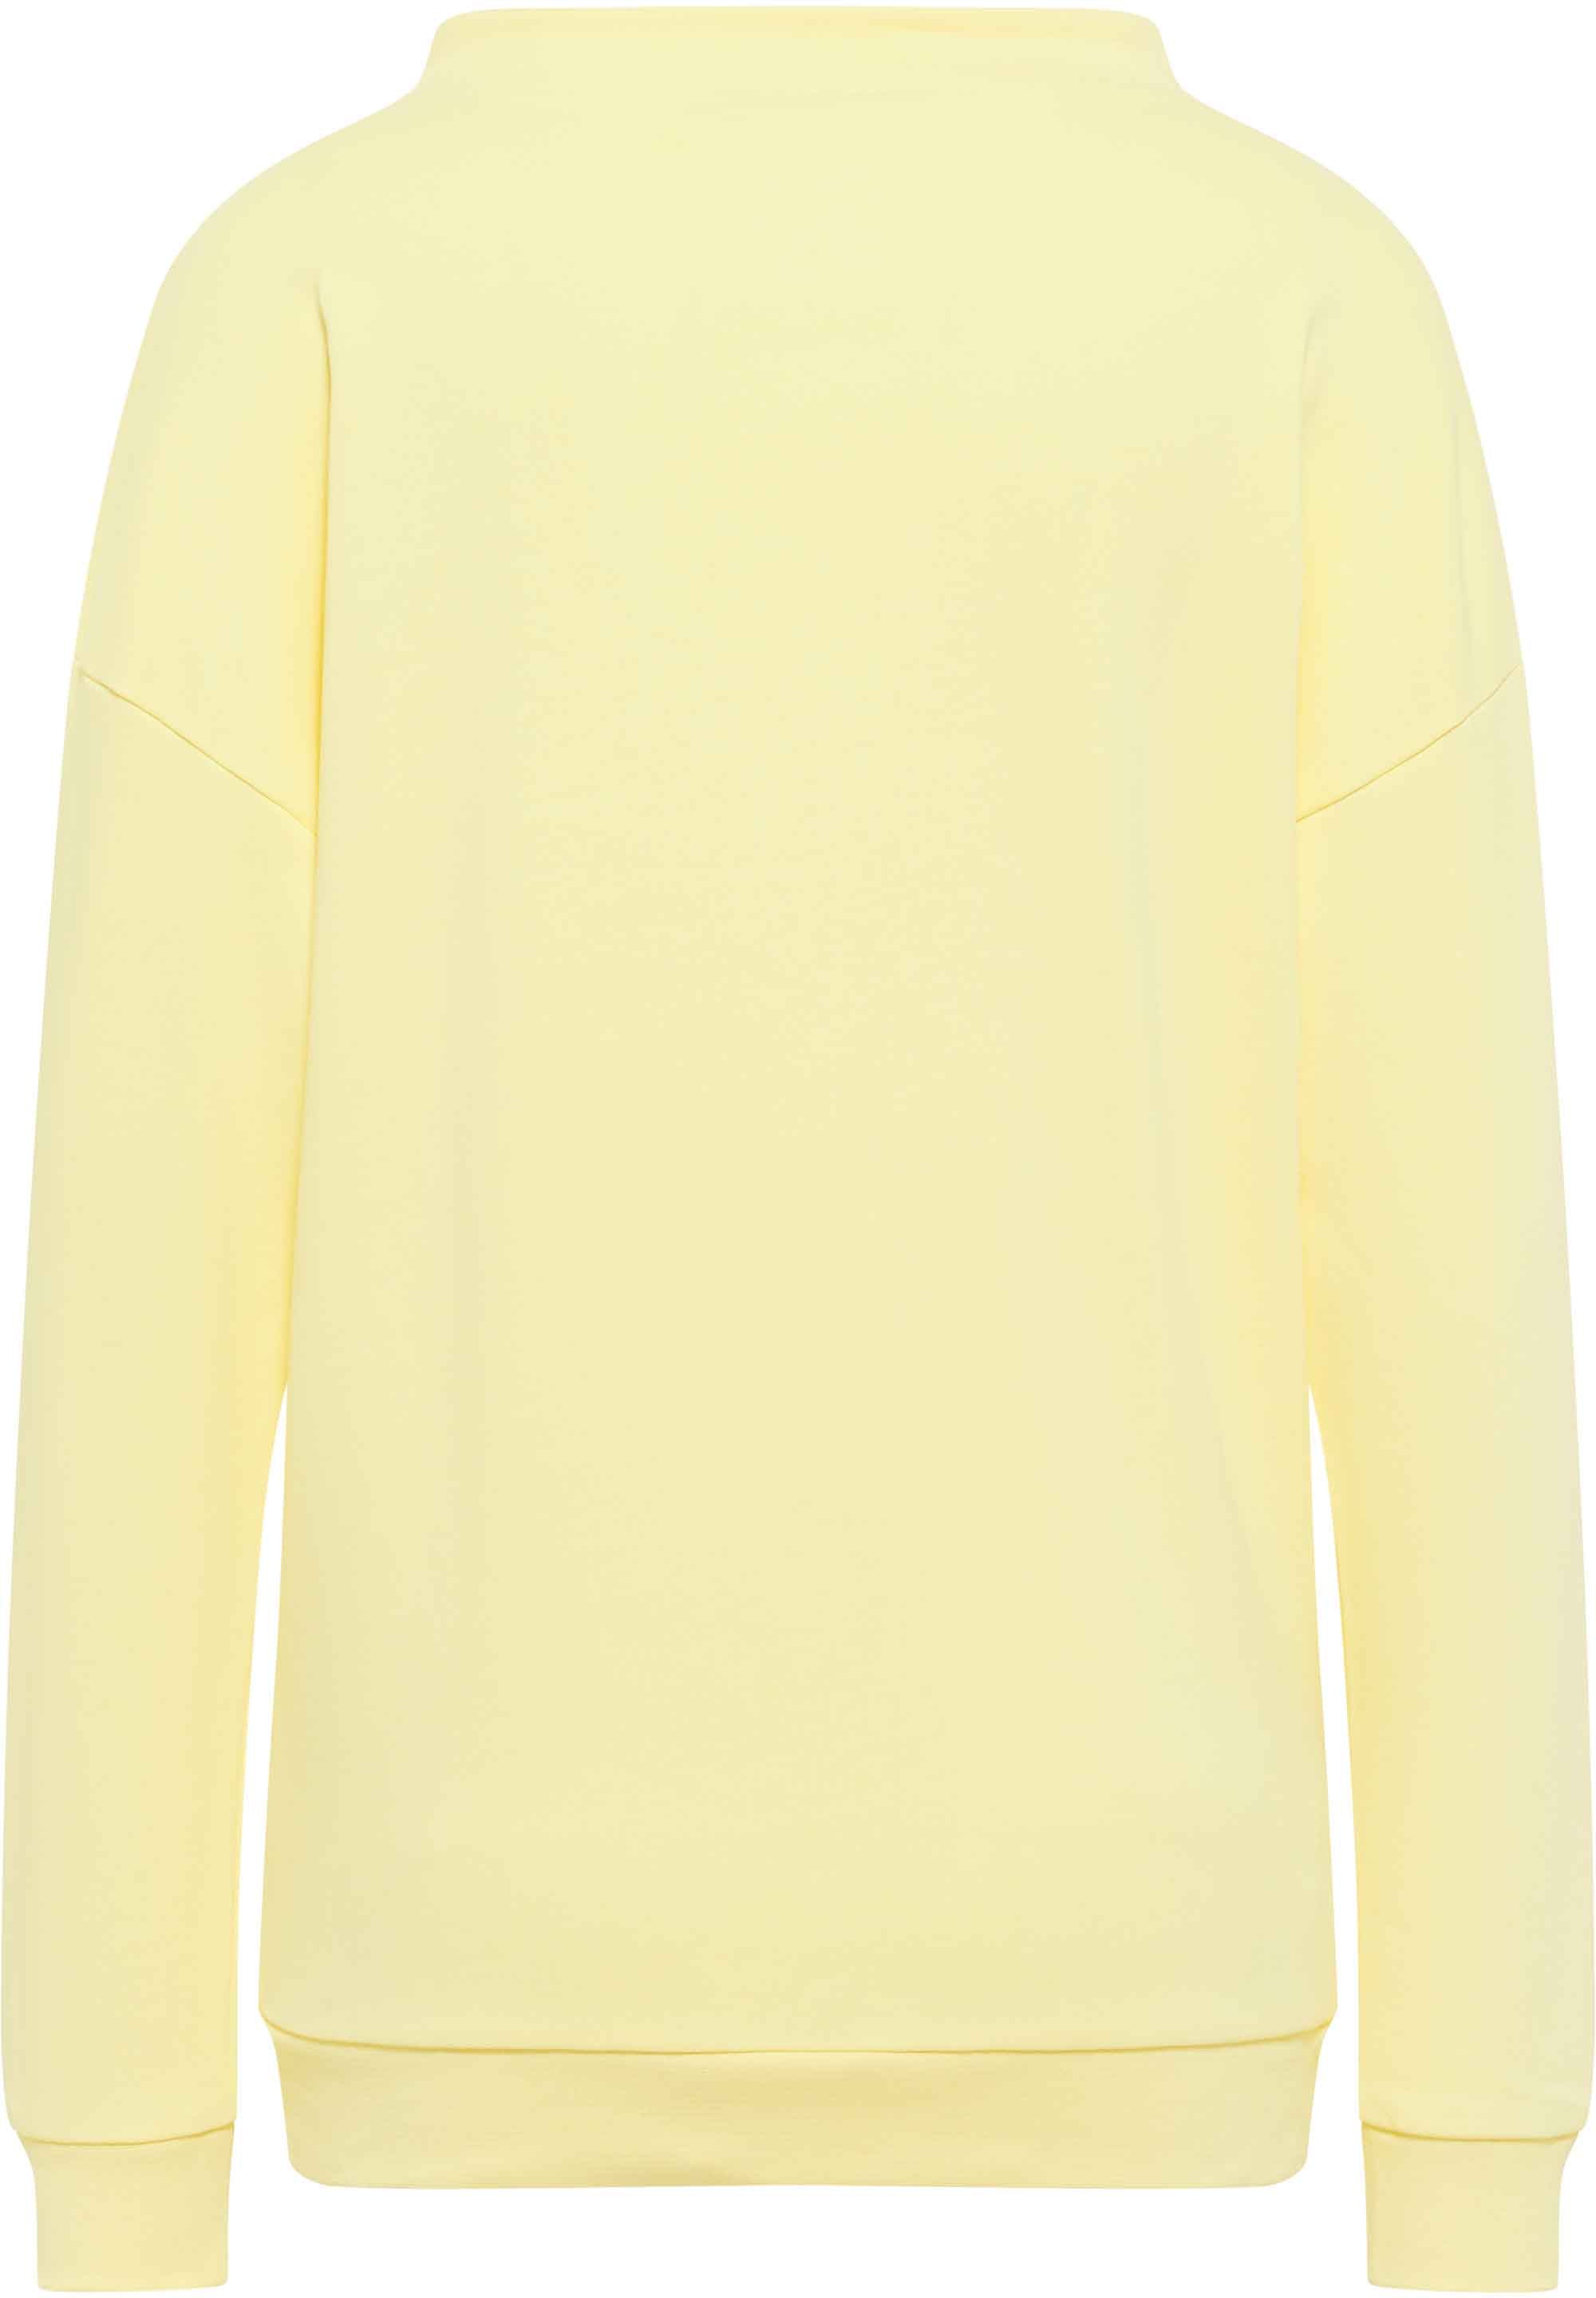 SOMWR REPLENISH Sweater YEL003